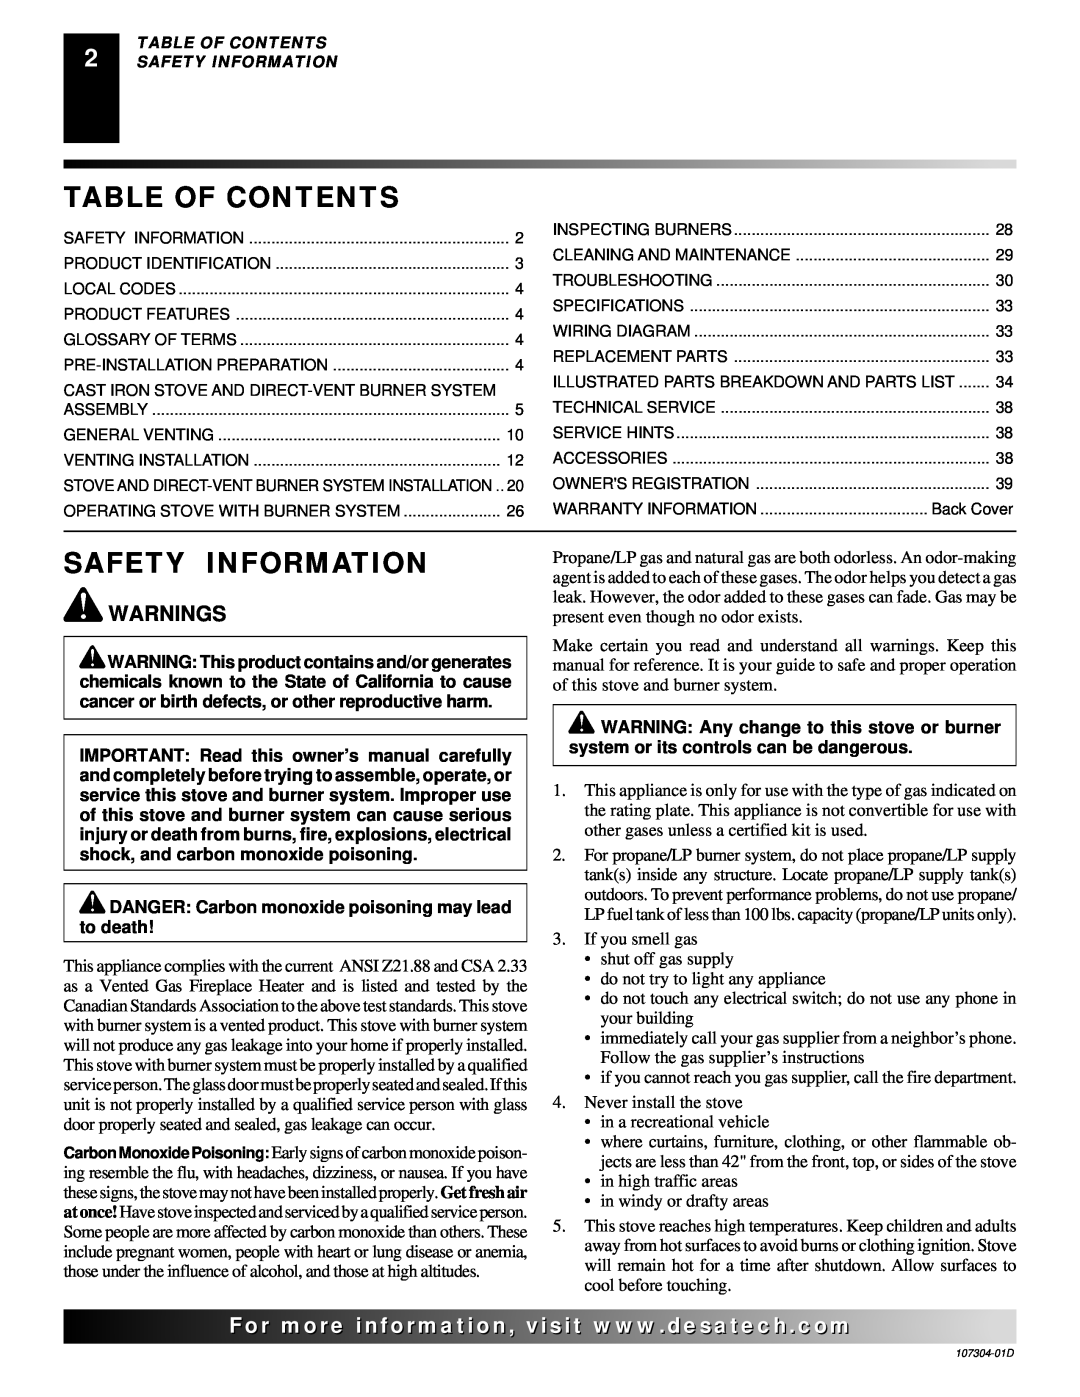 Desa SDVBPC, SDVBNC installation manual Table Of Contents, Safety Information, Warnings 